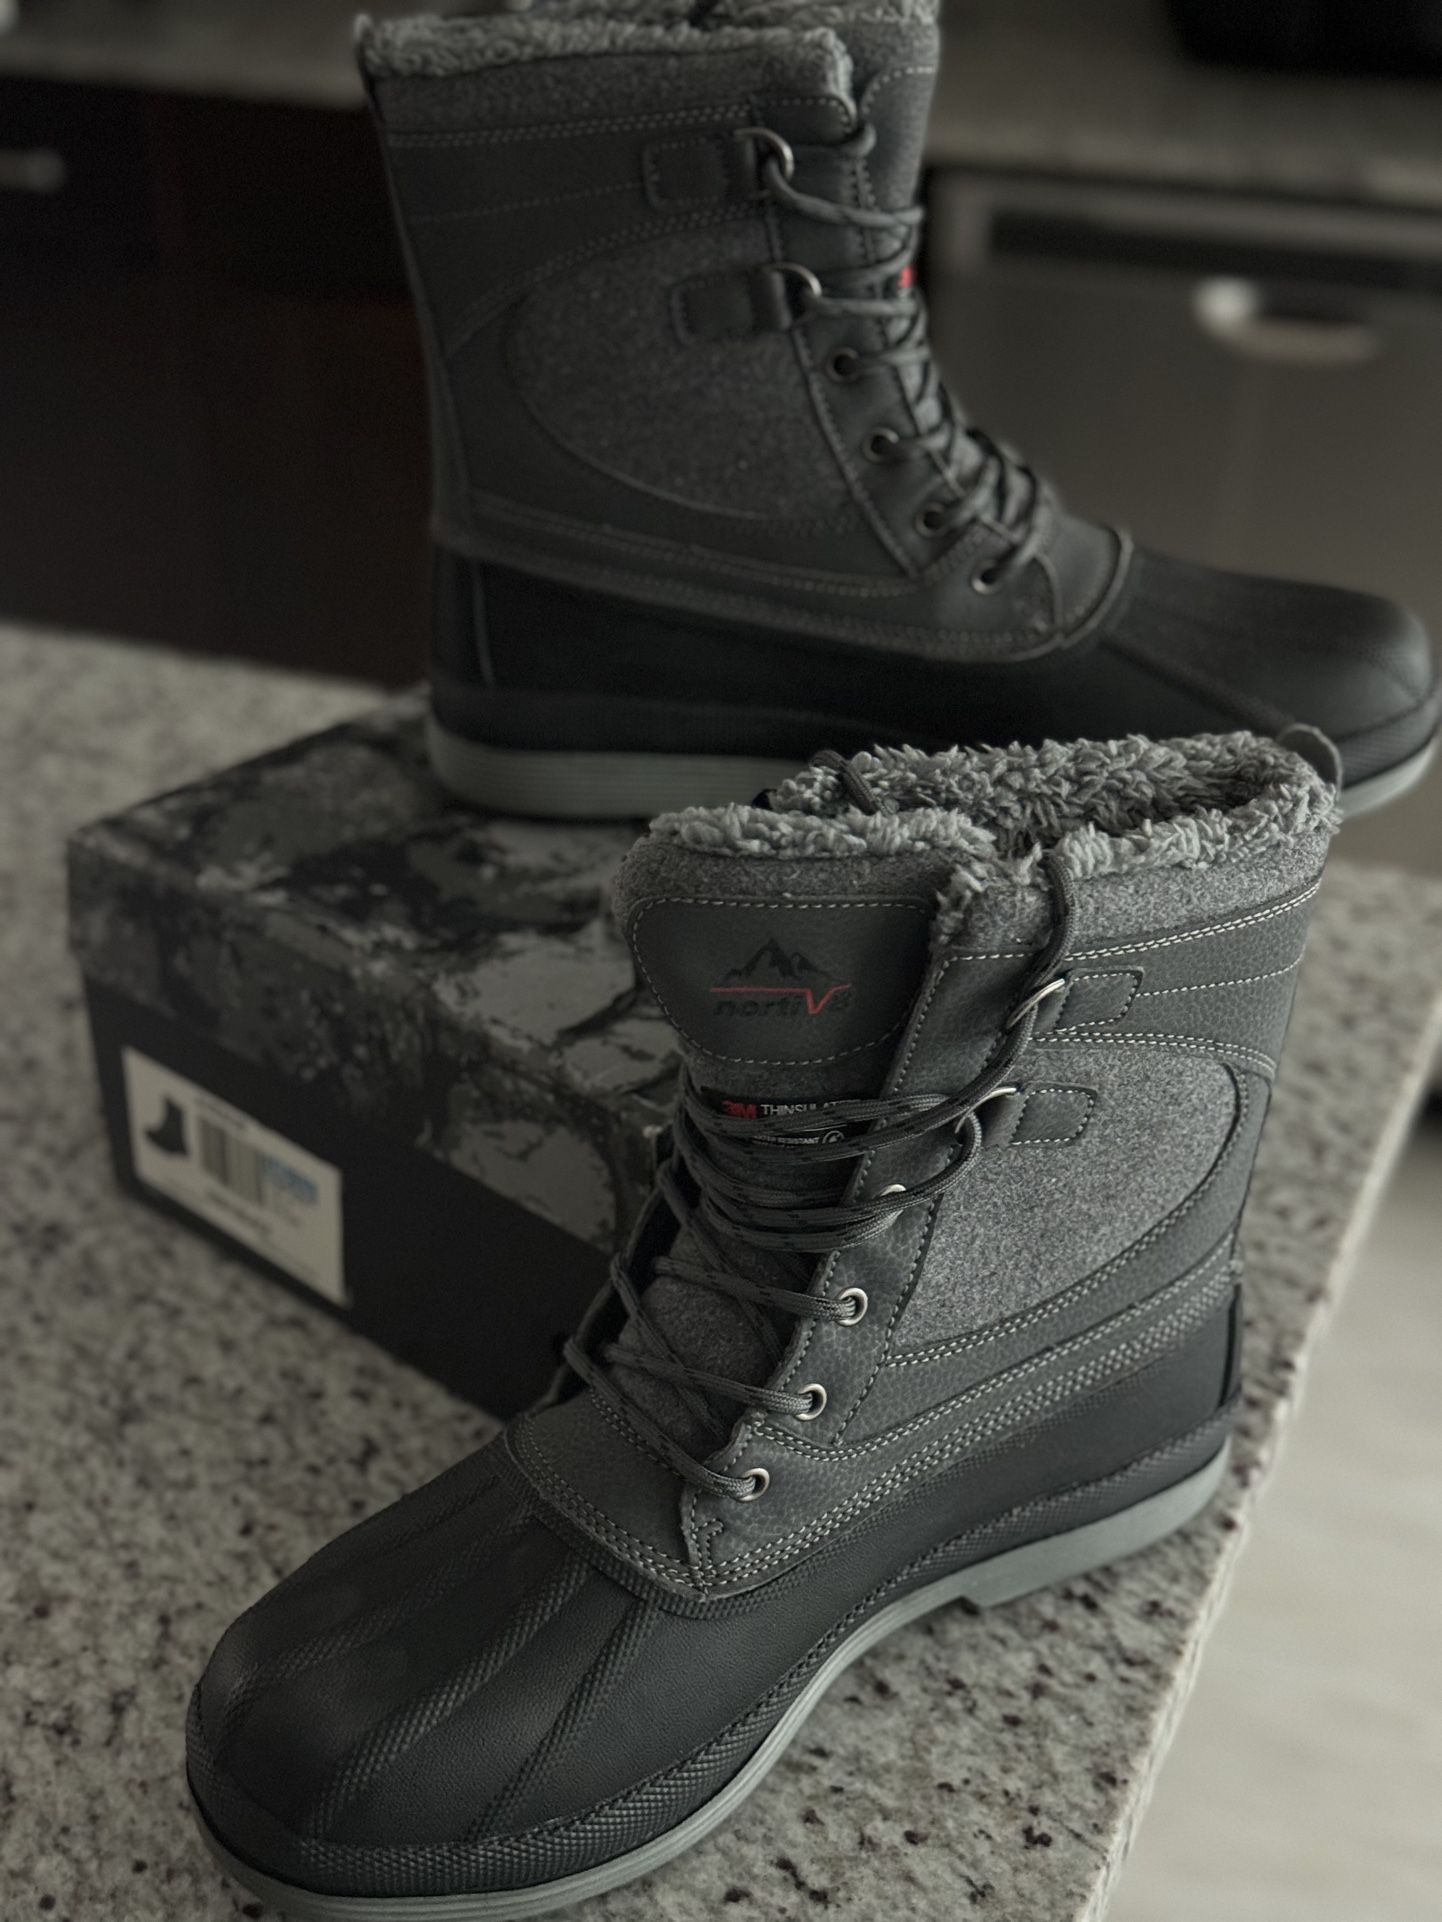 NEW Men’s Nortiv Waterproof Winter Snow Boots Size 11 In Grey/Black